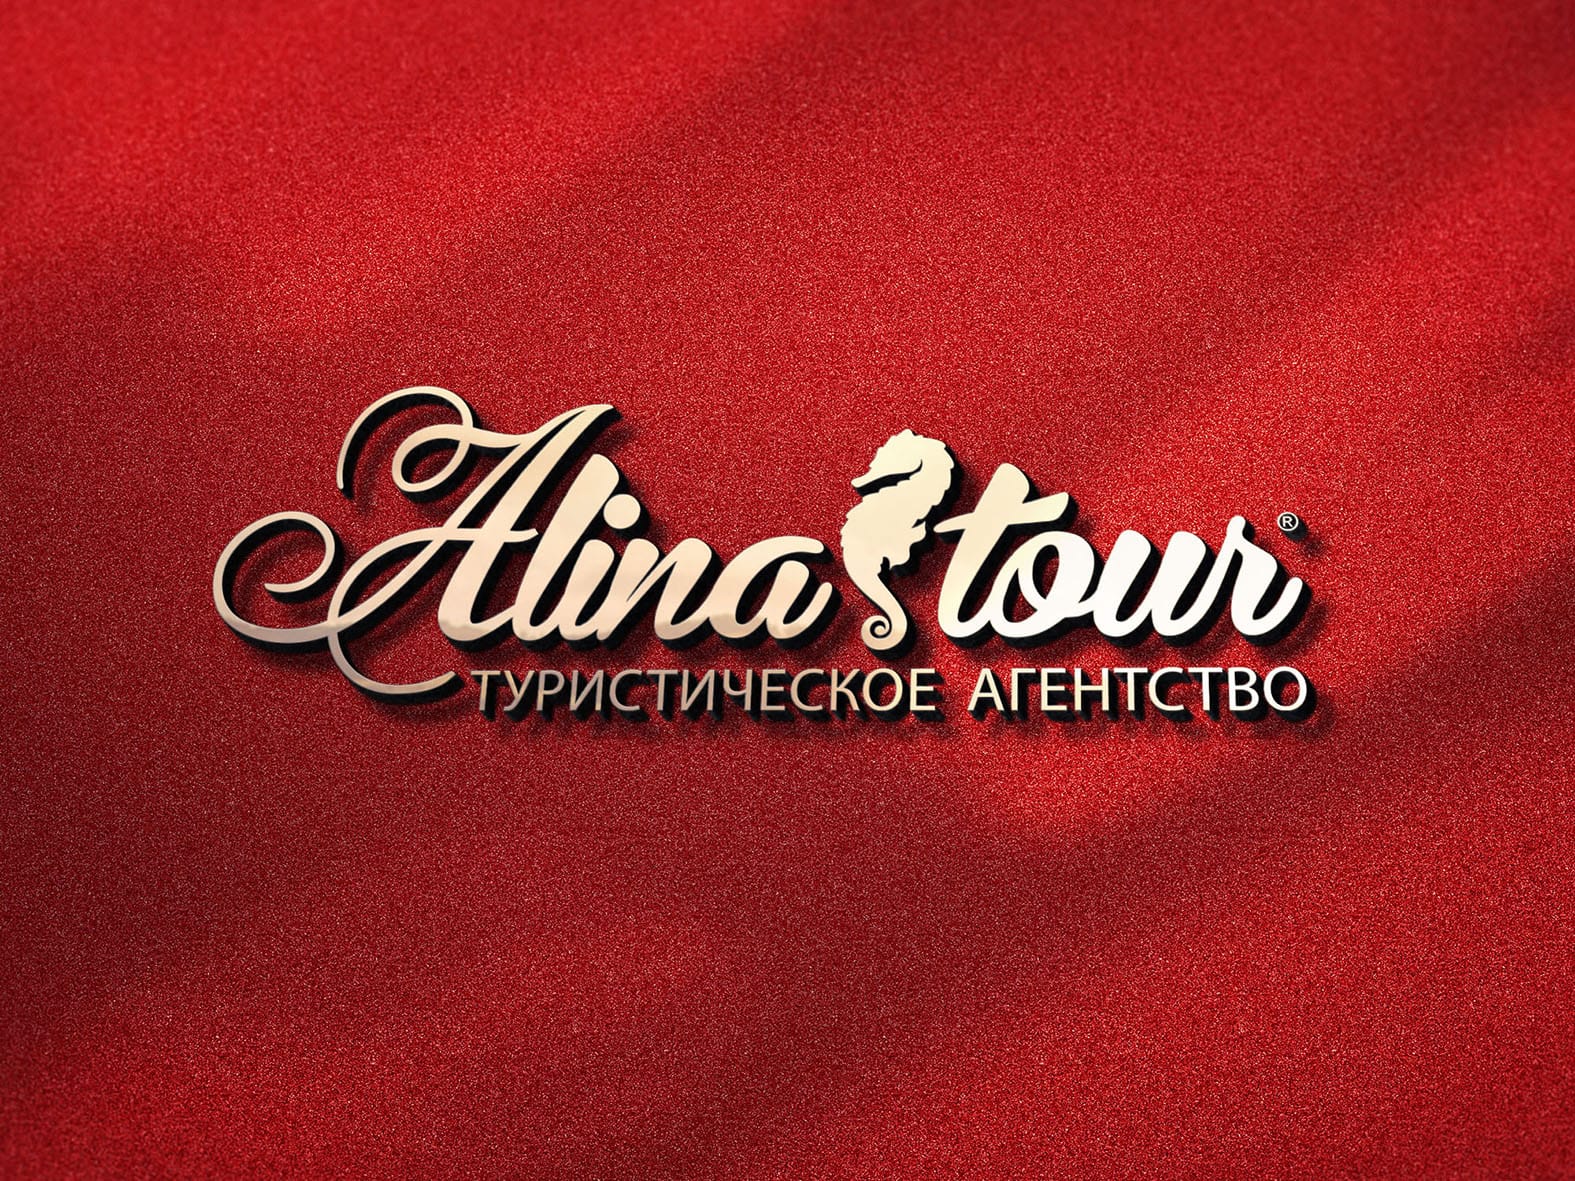 Ребрендинг торгового знака 2018 - Alina Tour